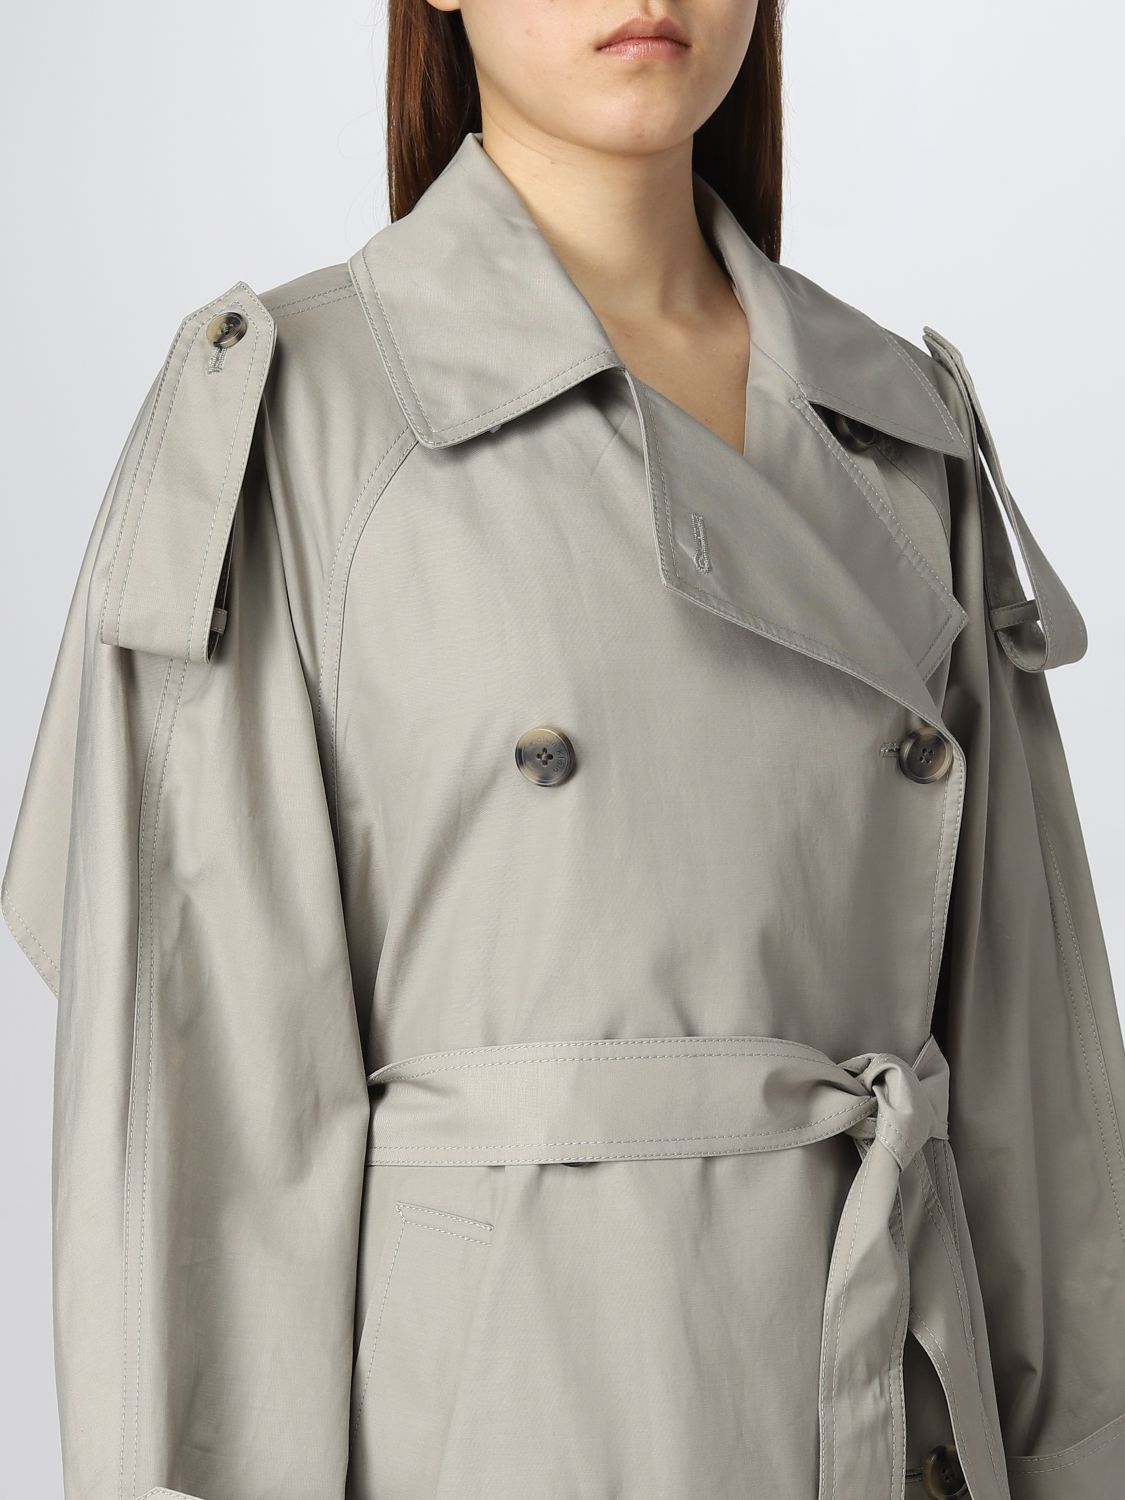 Conventie mosterd Aquarium CALVIN KLEIN: trench coat for woman - Beige | Calvin Klein trench coat  K20K204997 online on GIGLIO.COM